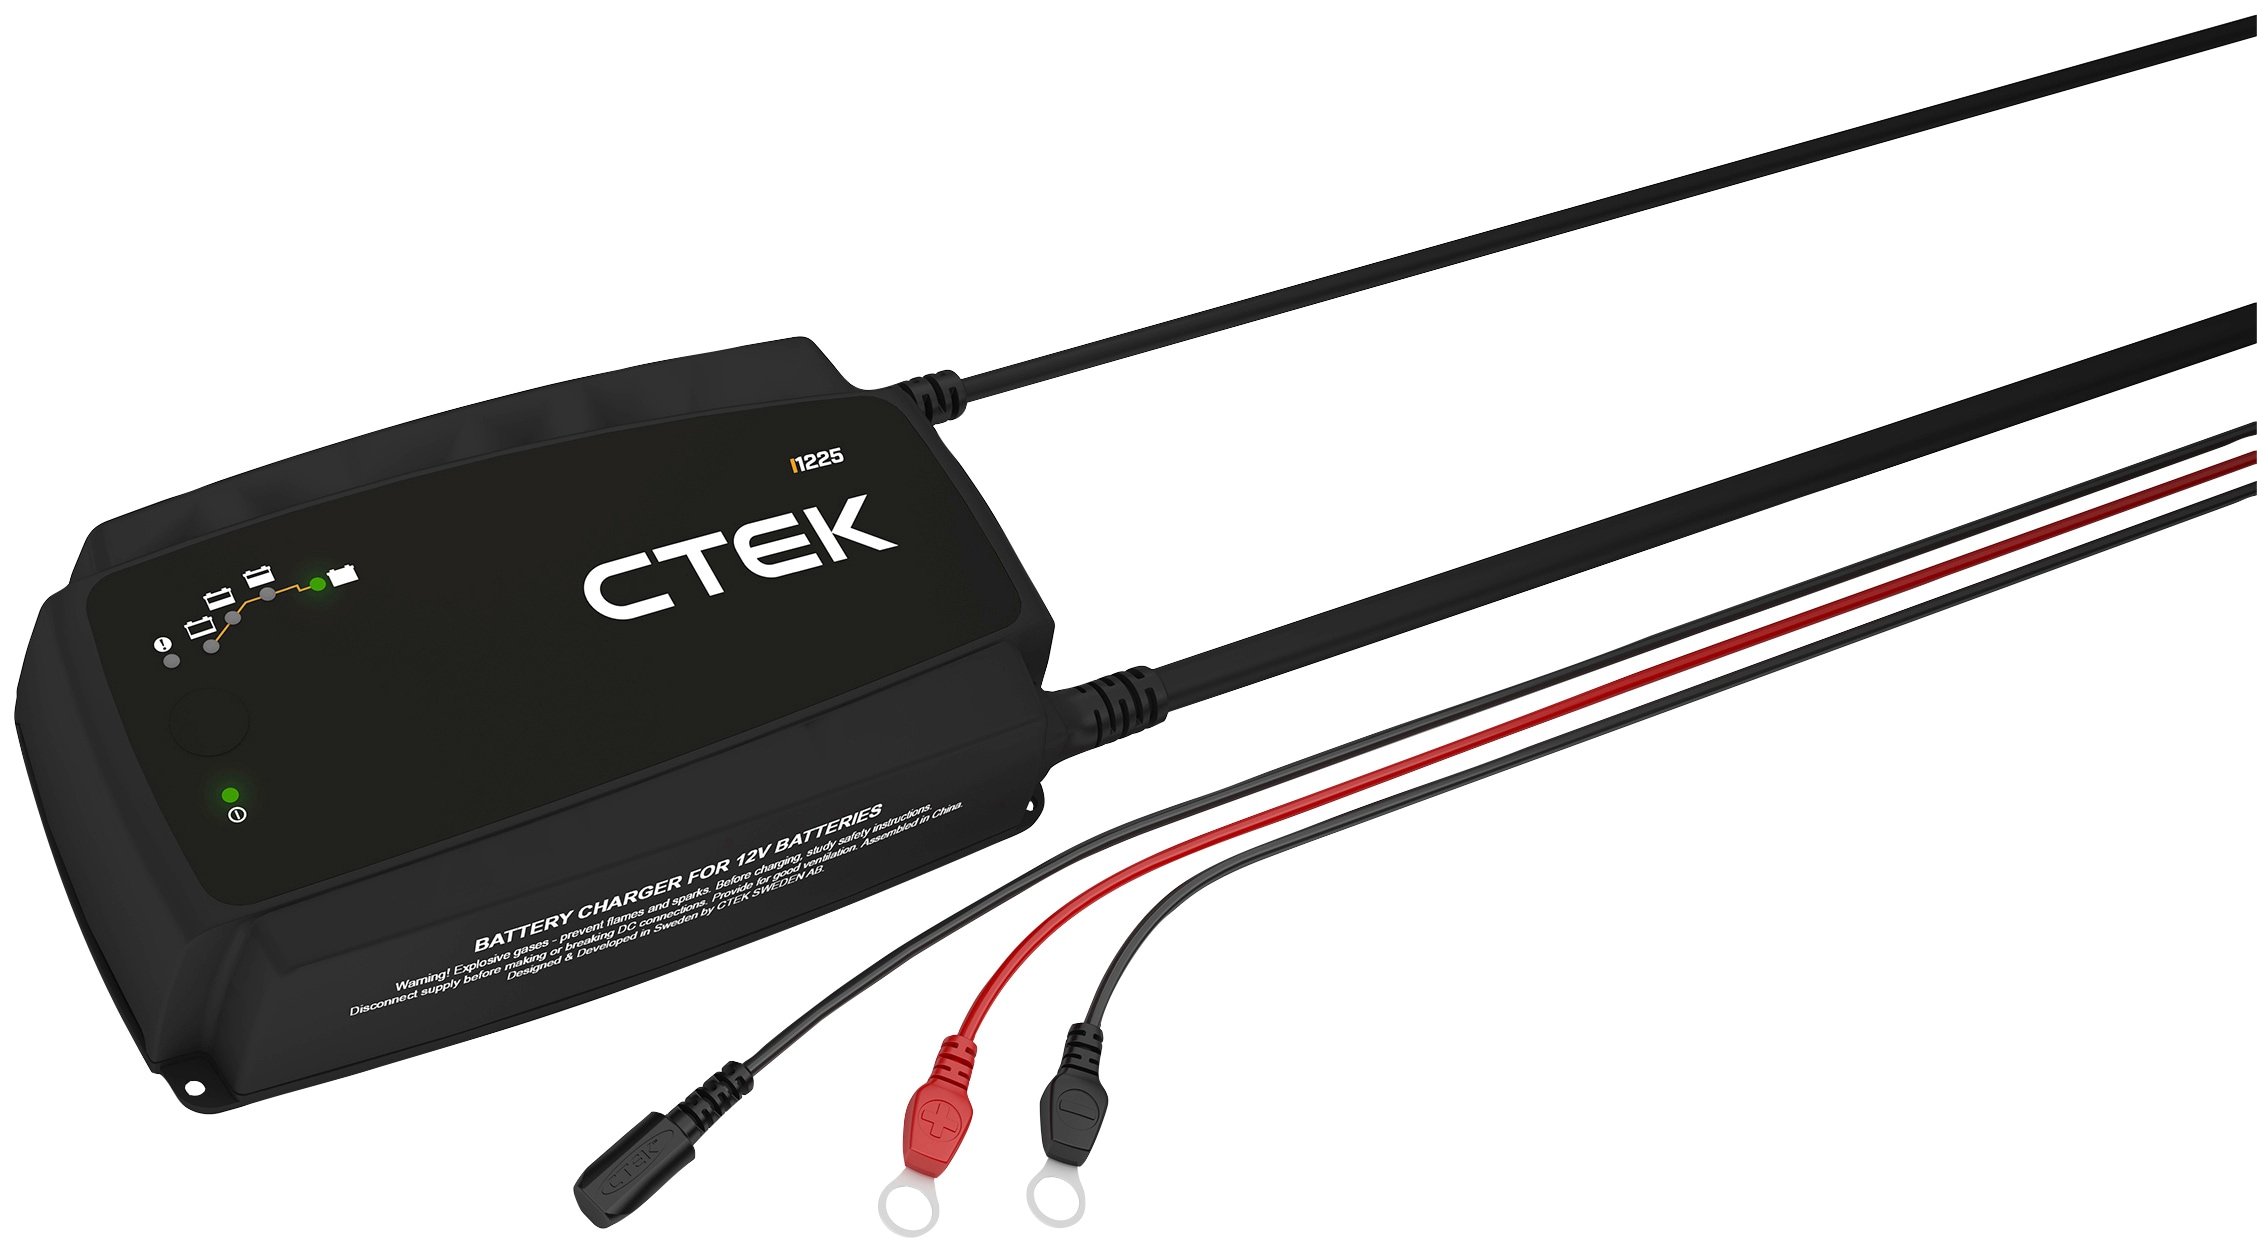 CTEK Batterie-Ladegerät »I1225«, Temperatursensor zur Optimierung des  Ladevorgangs in kalten Umgebungen